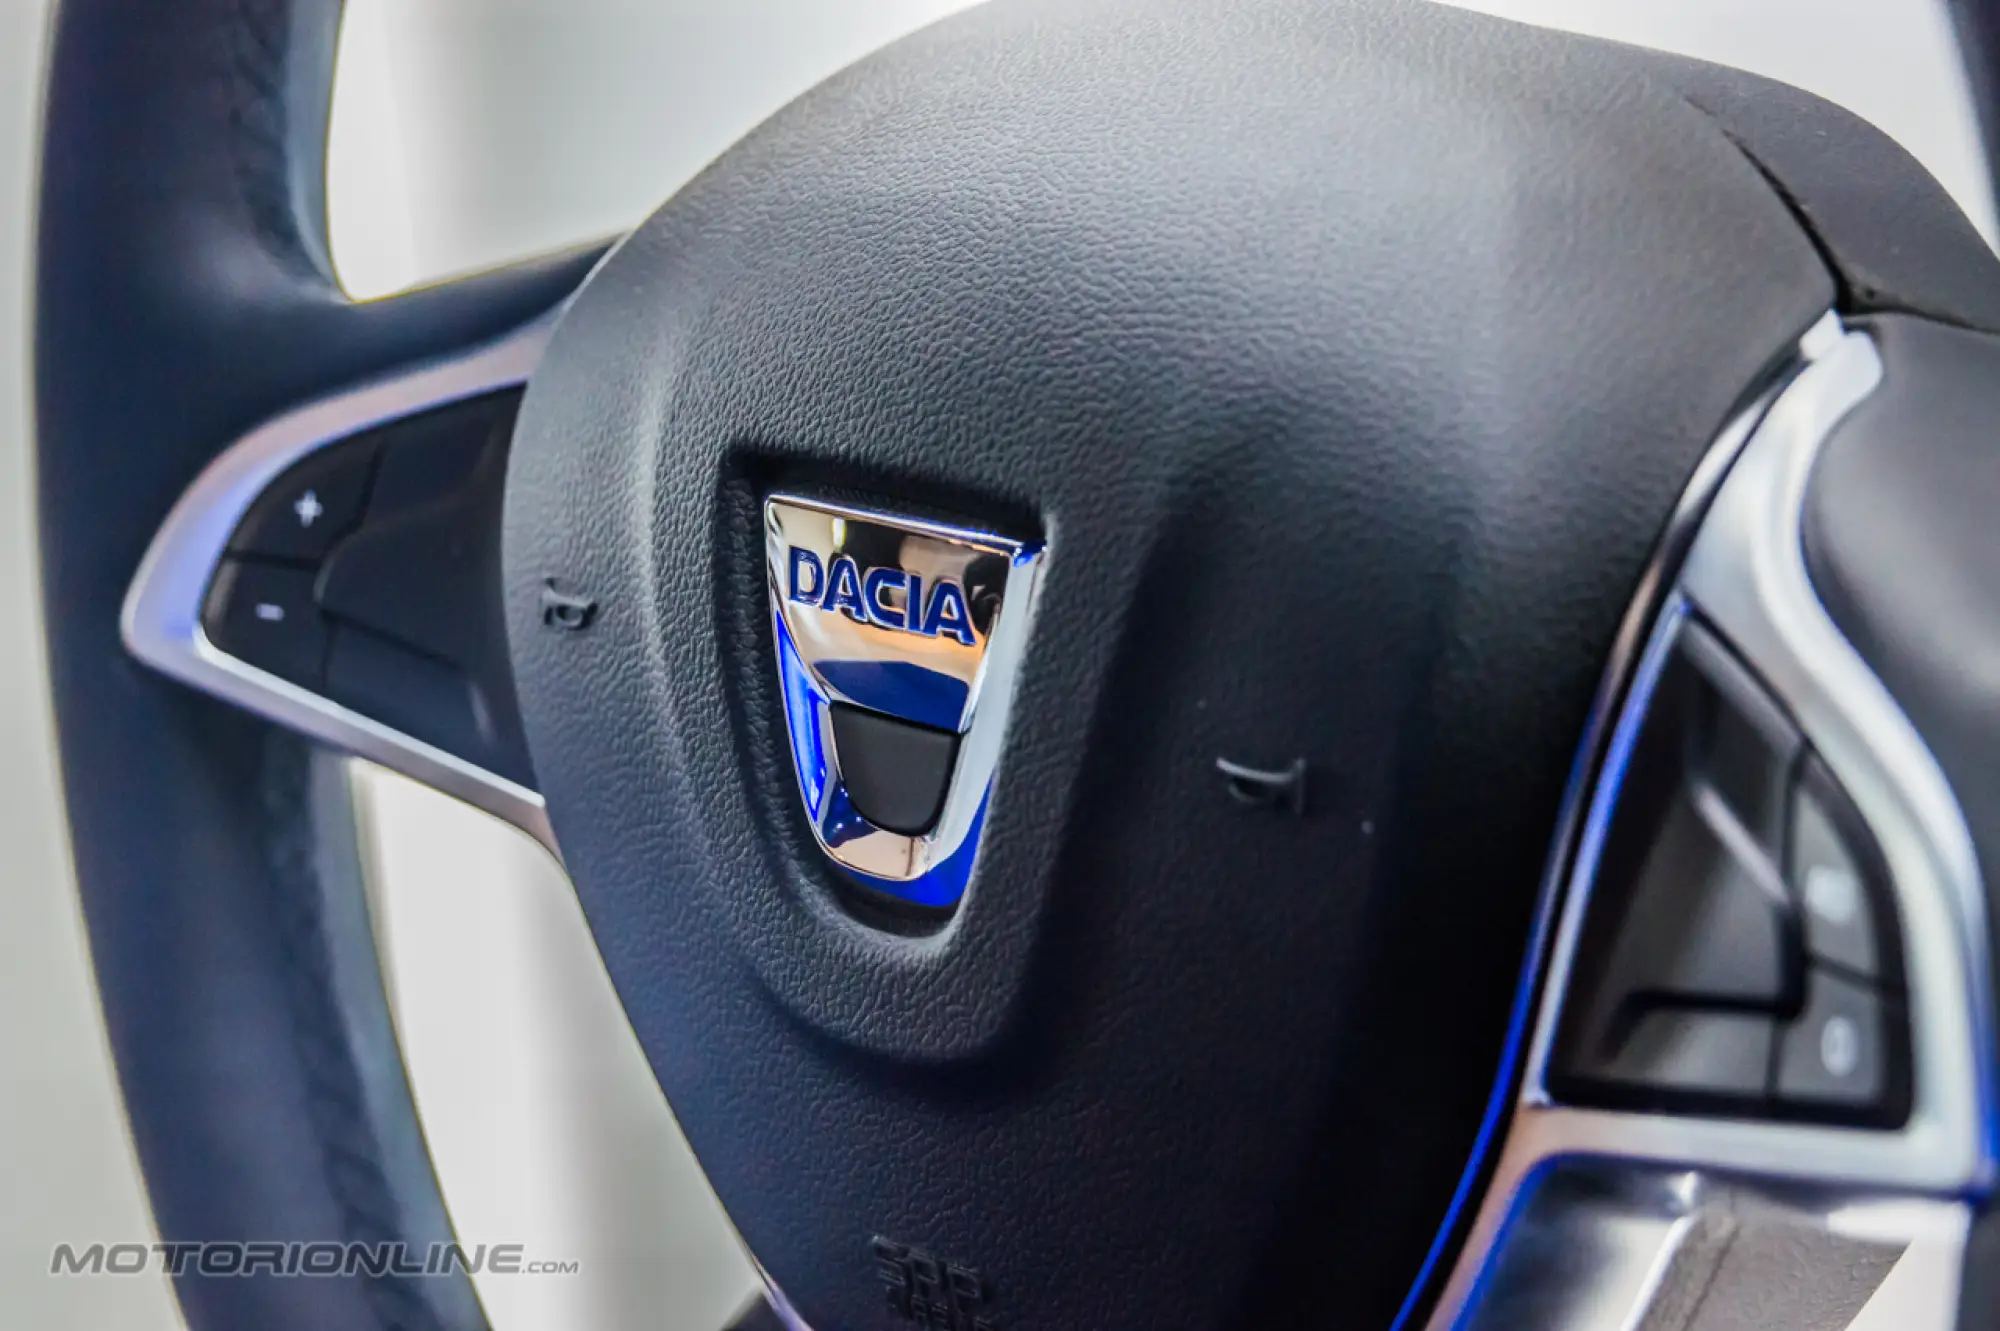 Nuova Gamma Dacia 2017 - Anteprima Test Drive - 2